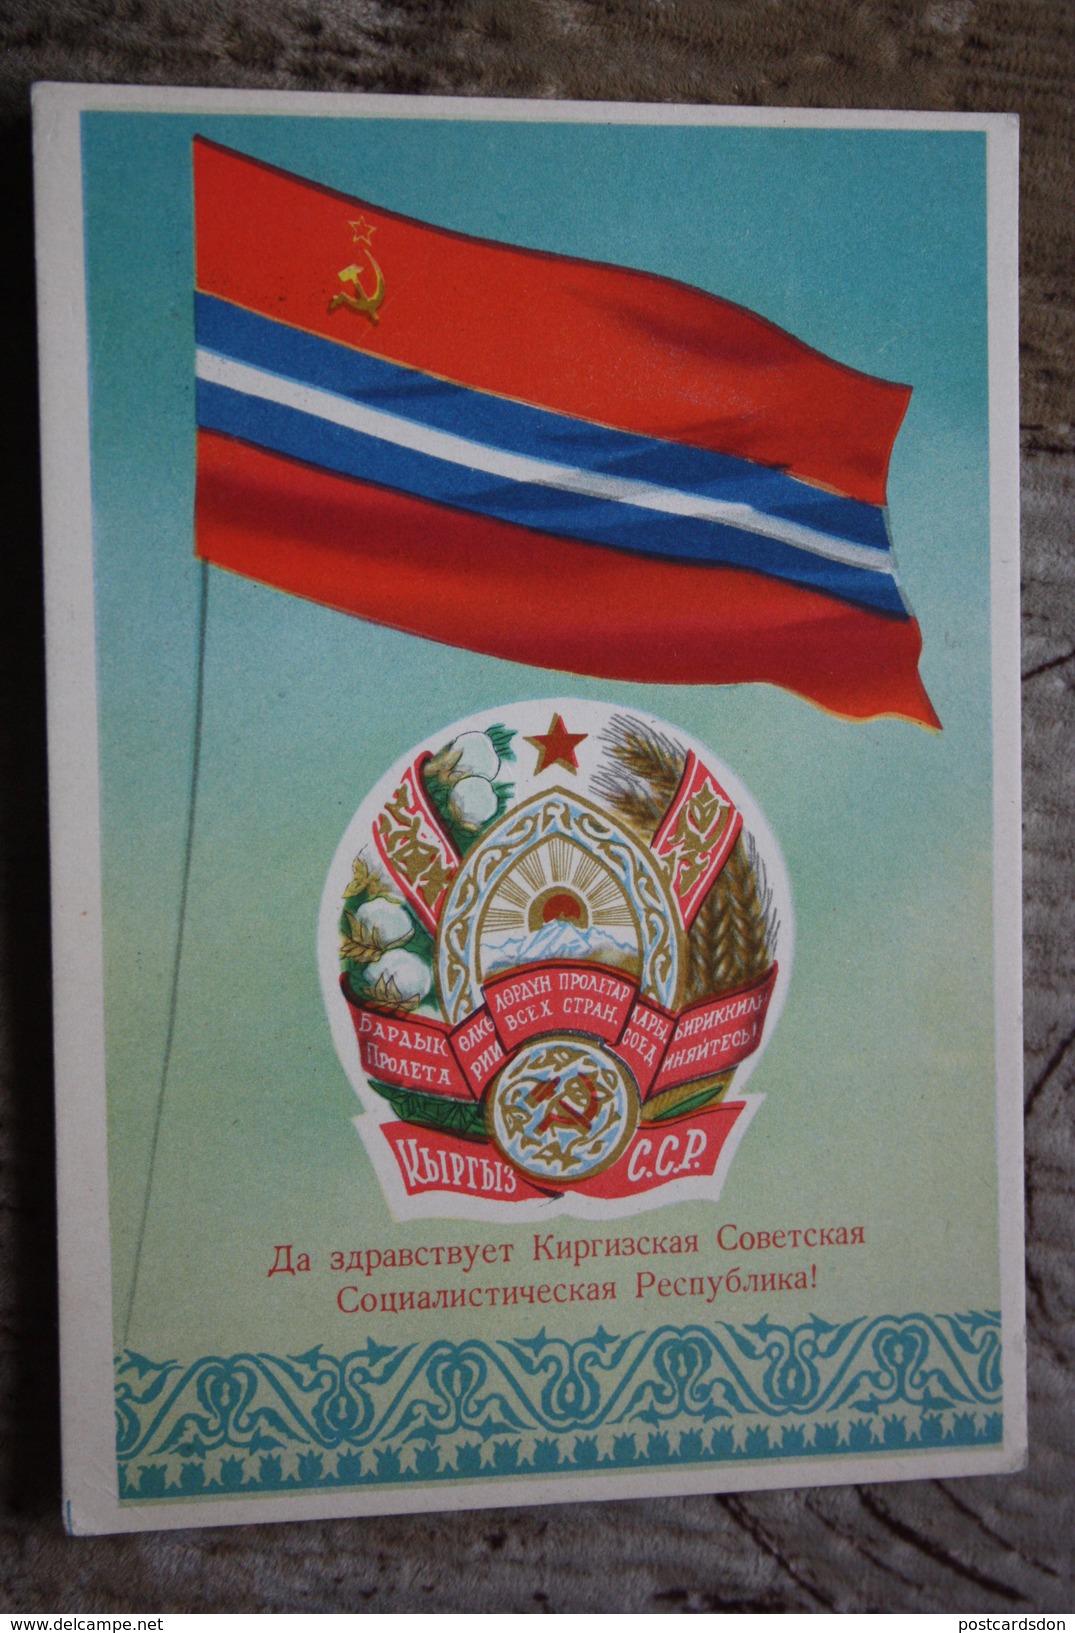 Kyrgyzstan - Postcard The State Emblem And State Flag Of The Kyrgyz Soviet Socialist Republic - 1956 - Rare! - Kirgizië